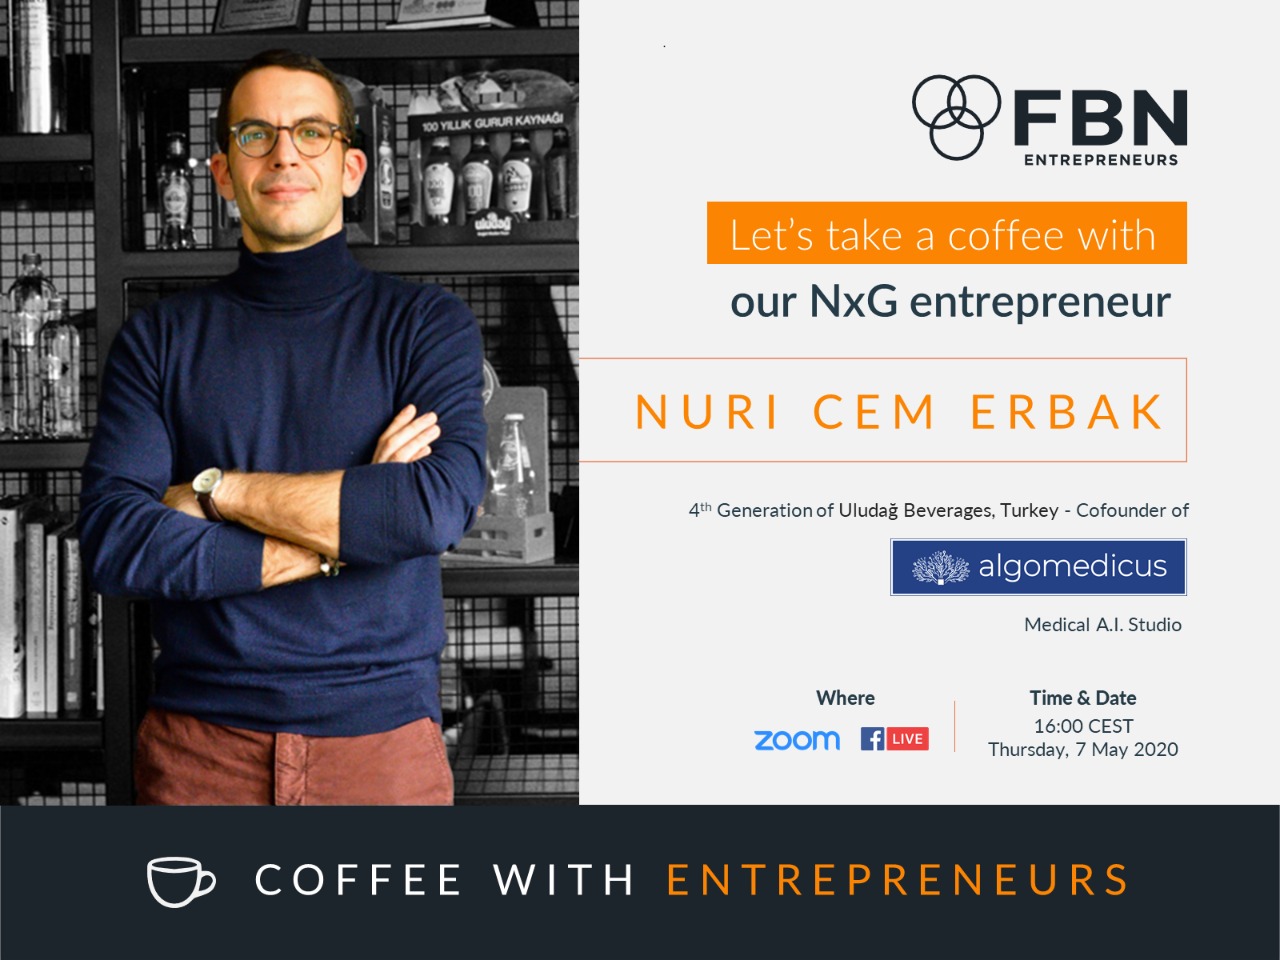 Coffee with Entrepreneurs